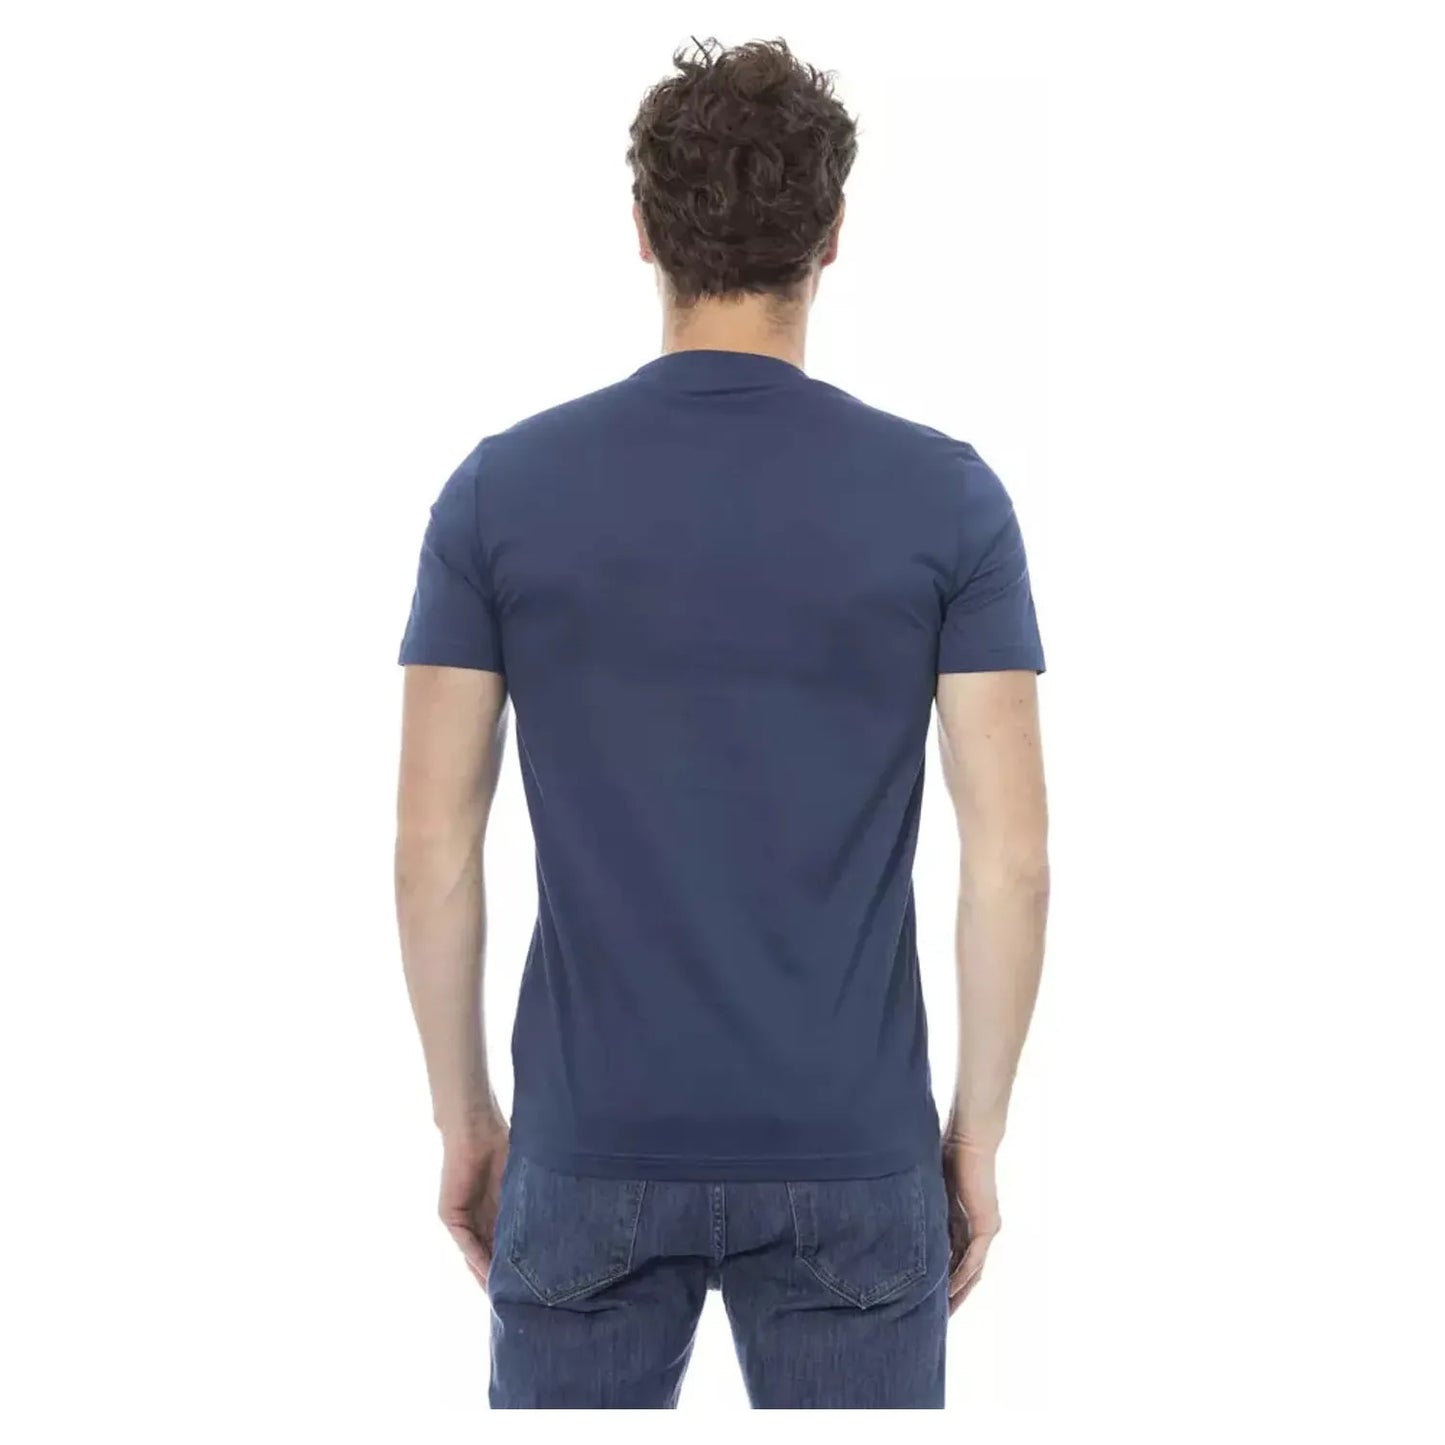 Baldinini Trend Elegant Blue Cotton Tee with Chic Front Print blue-cotton-t-shirt-107